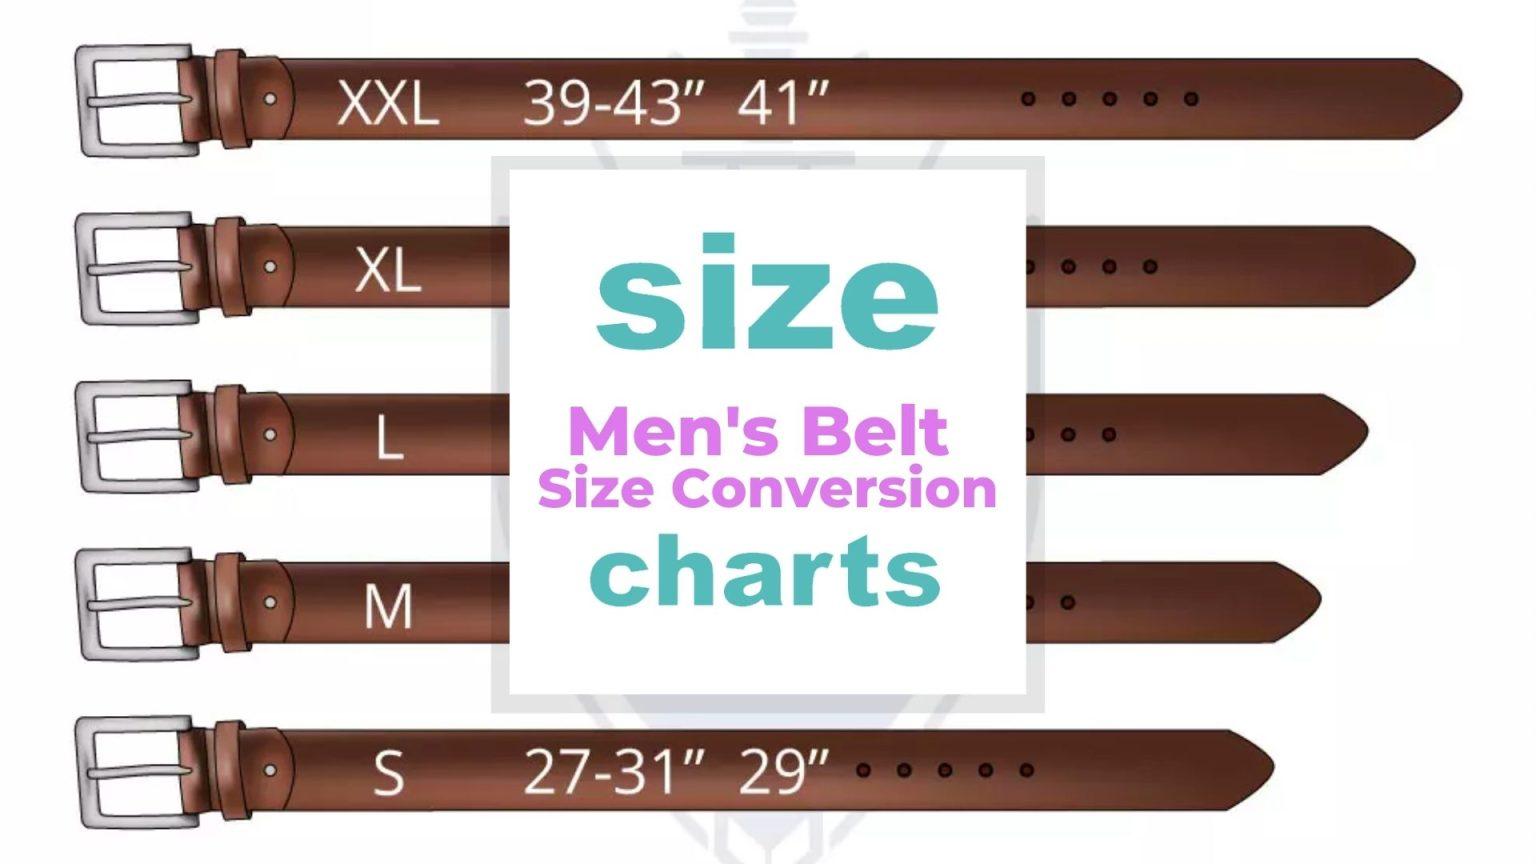 Topic Belt Size Chart